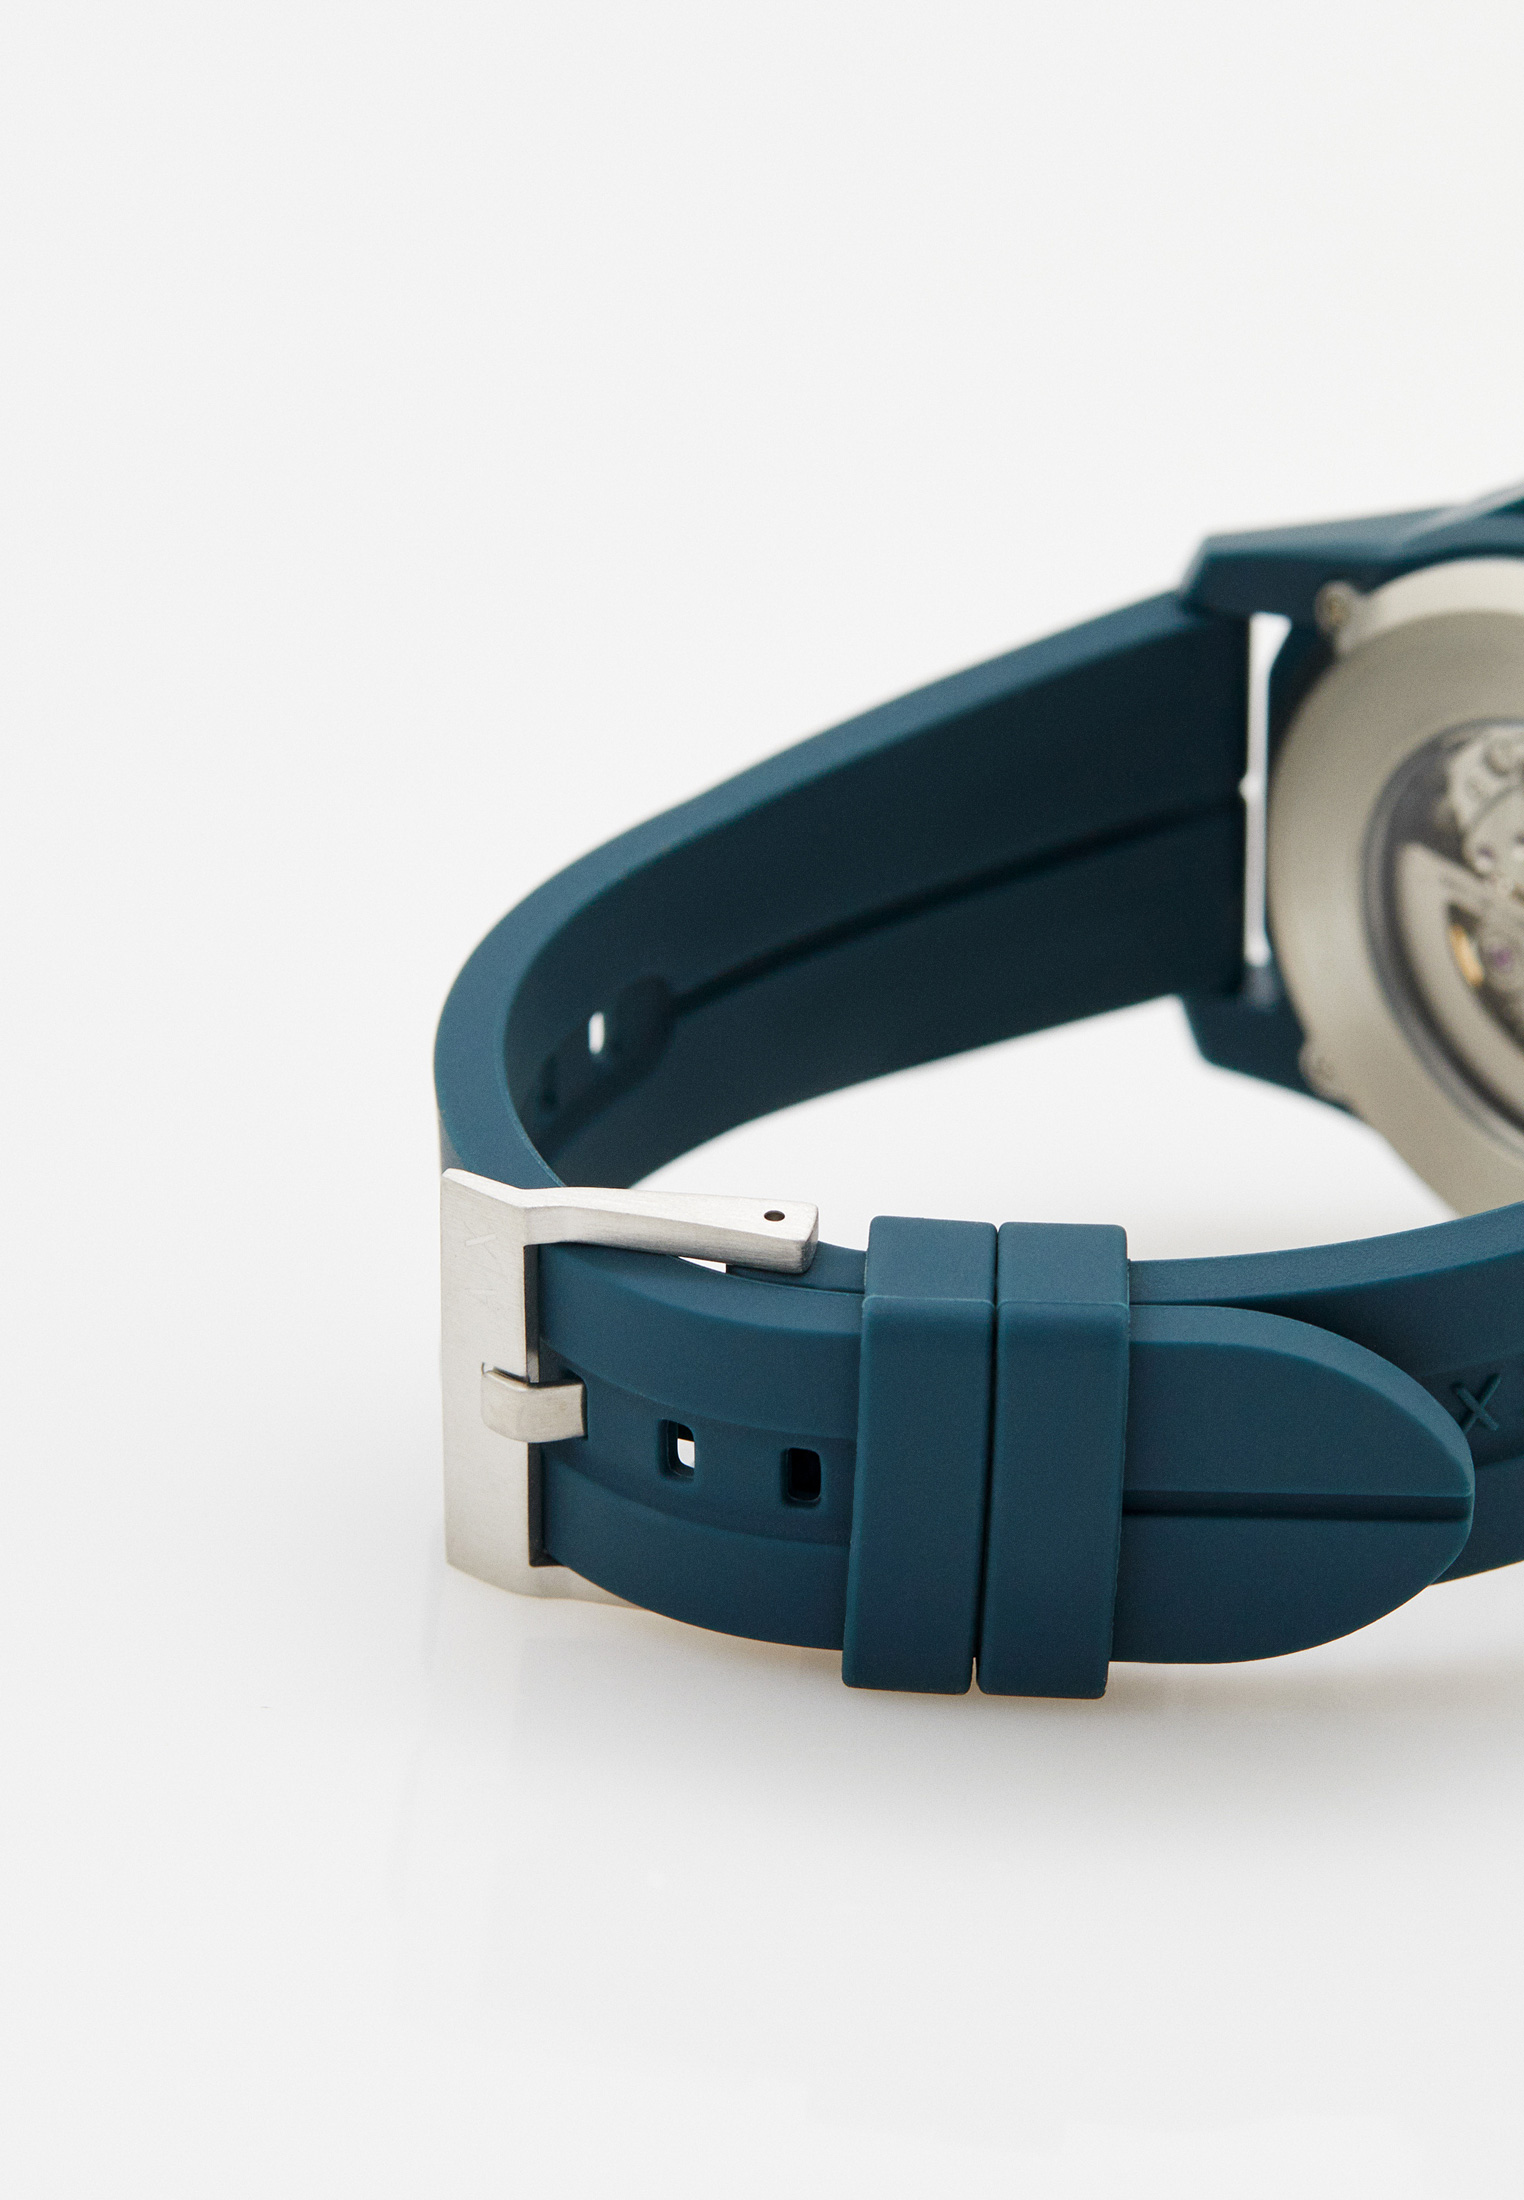 в цвет: AX1730, Часы синий, Lamoda Exchange — Armani интернет-магазине RTLACH953001 купить